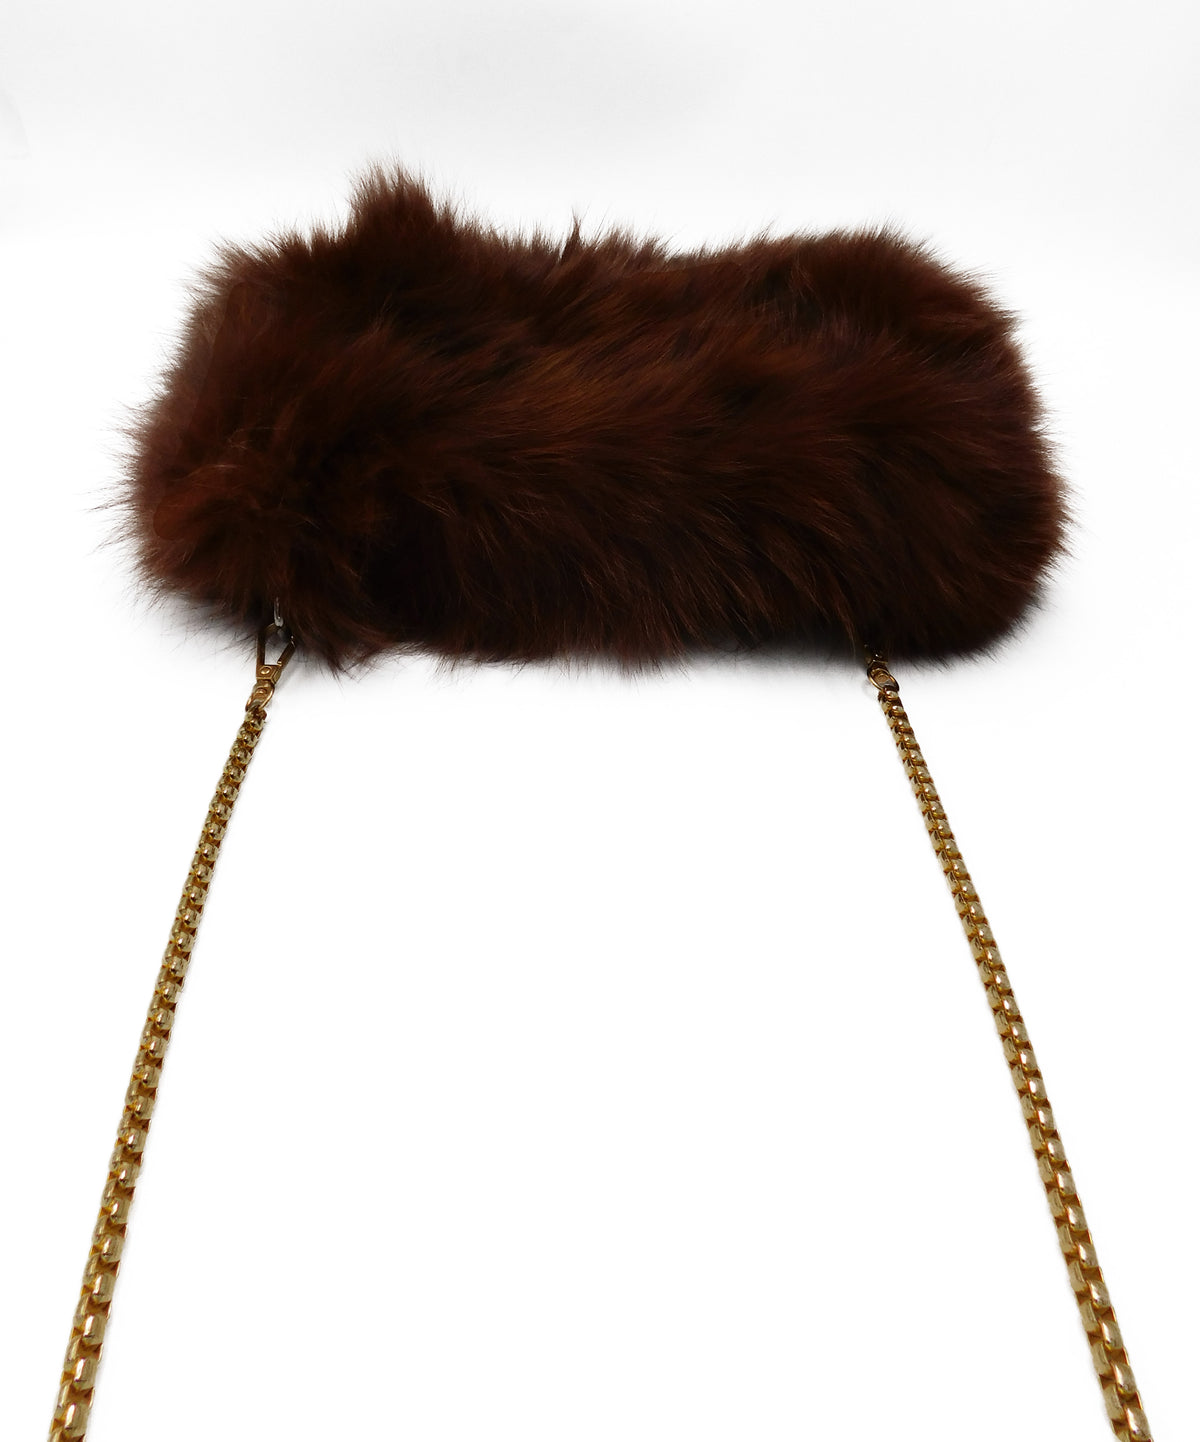 Fox Fur Muff Handbag with Gold Chain - paulamariecollection